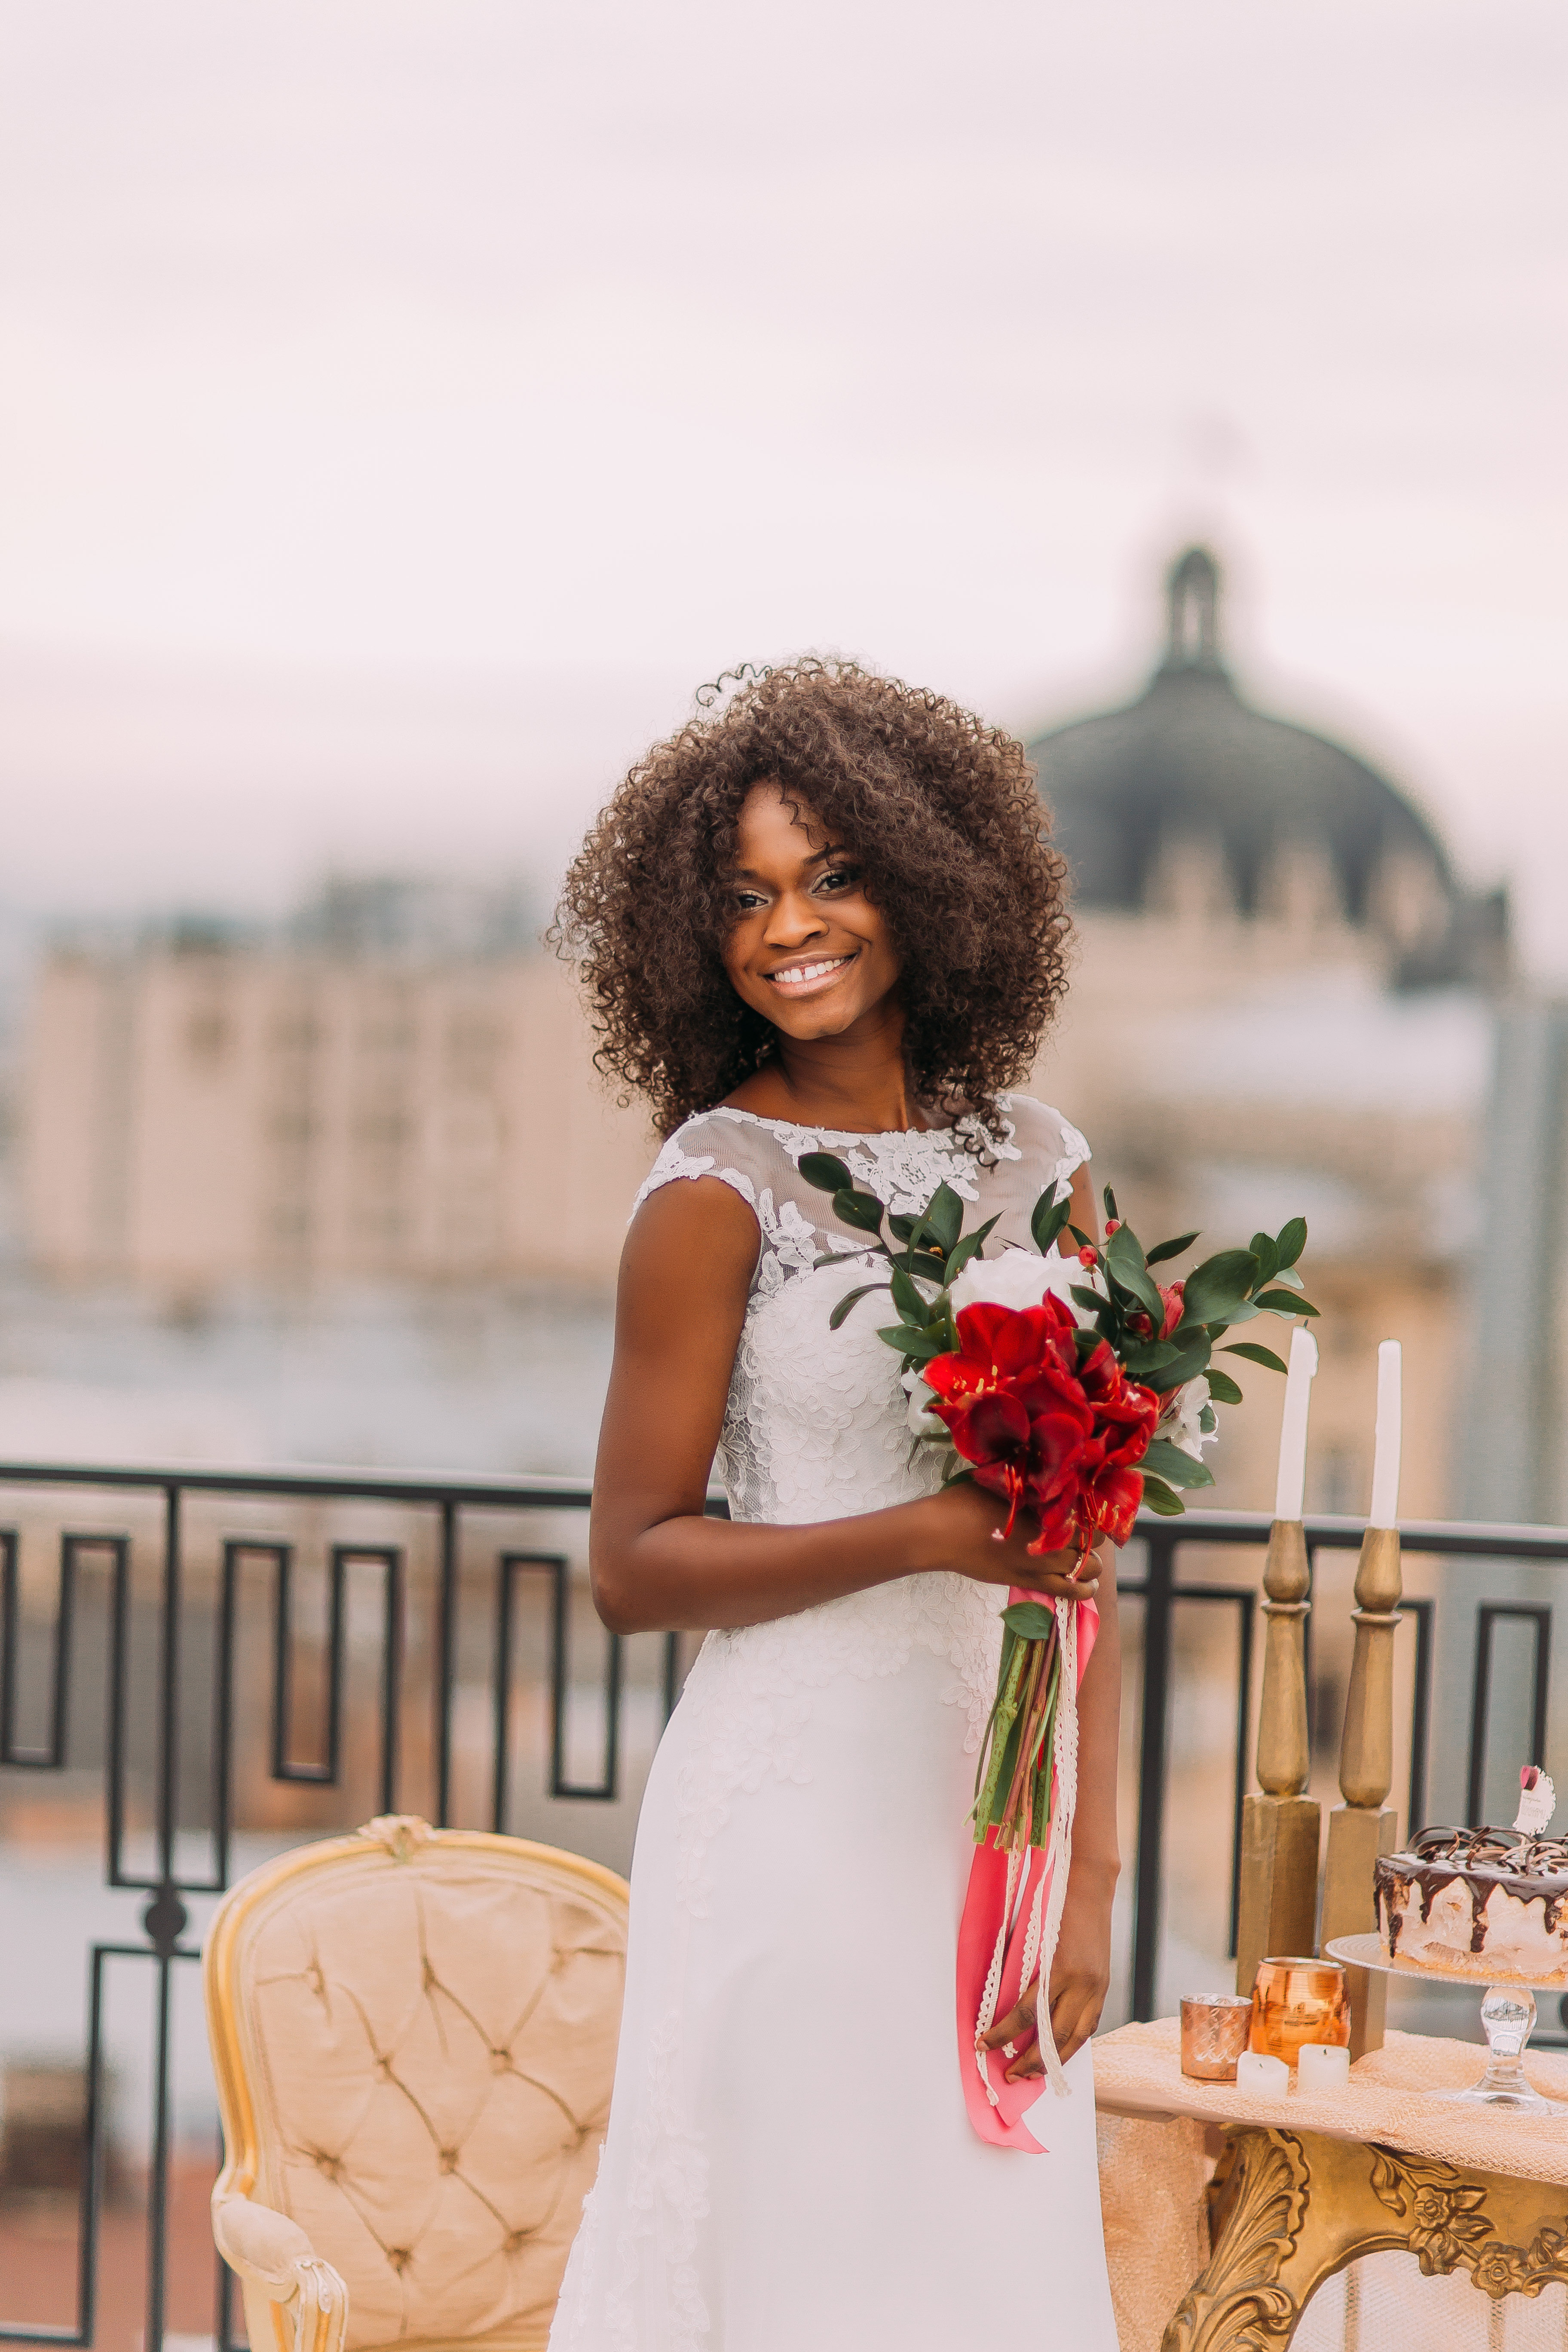 Une mariée | Source : Shutterstock